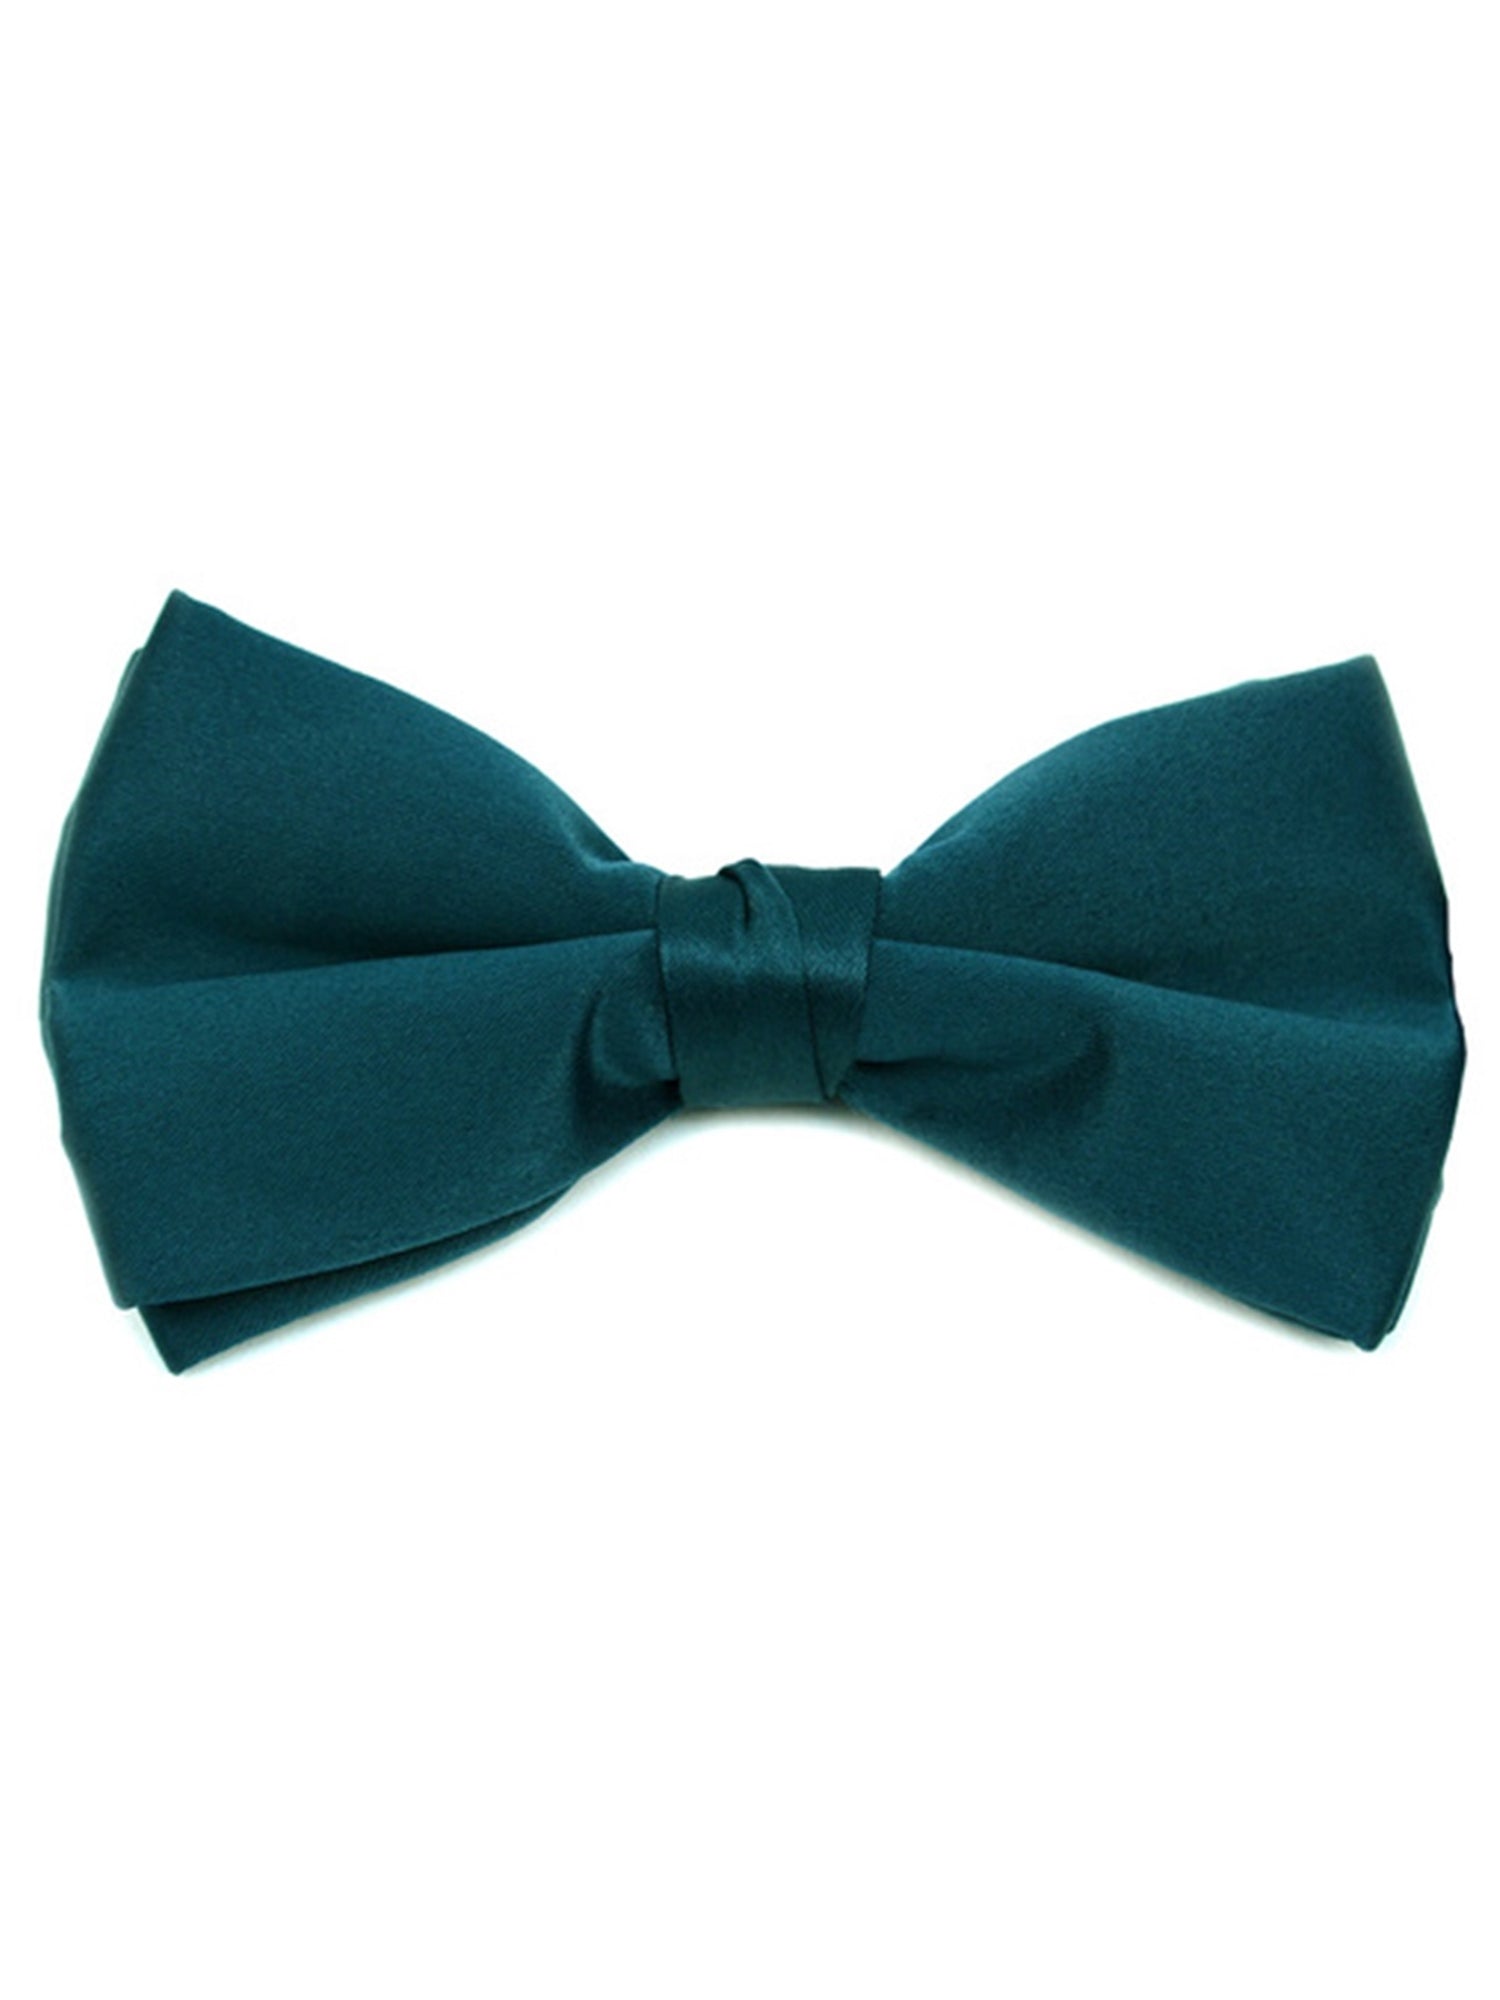 Men's Pre-tied Clip On Bow Tie - Formal Tuxedo Solid Color Men's Solid Color Bow Tie TheDapperTie Hunter Green One Size 